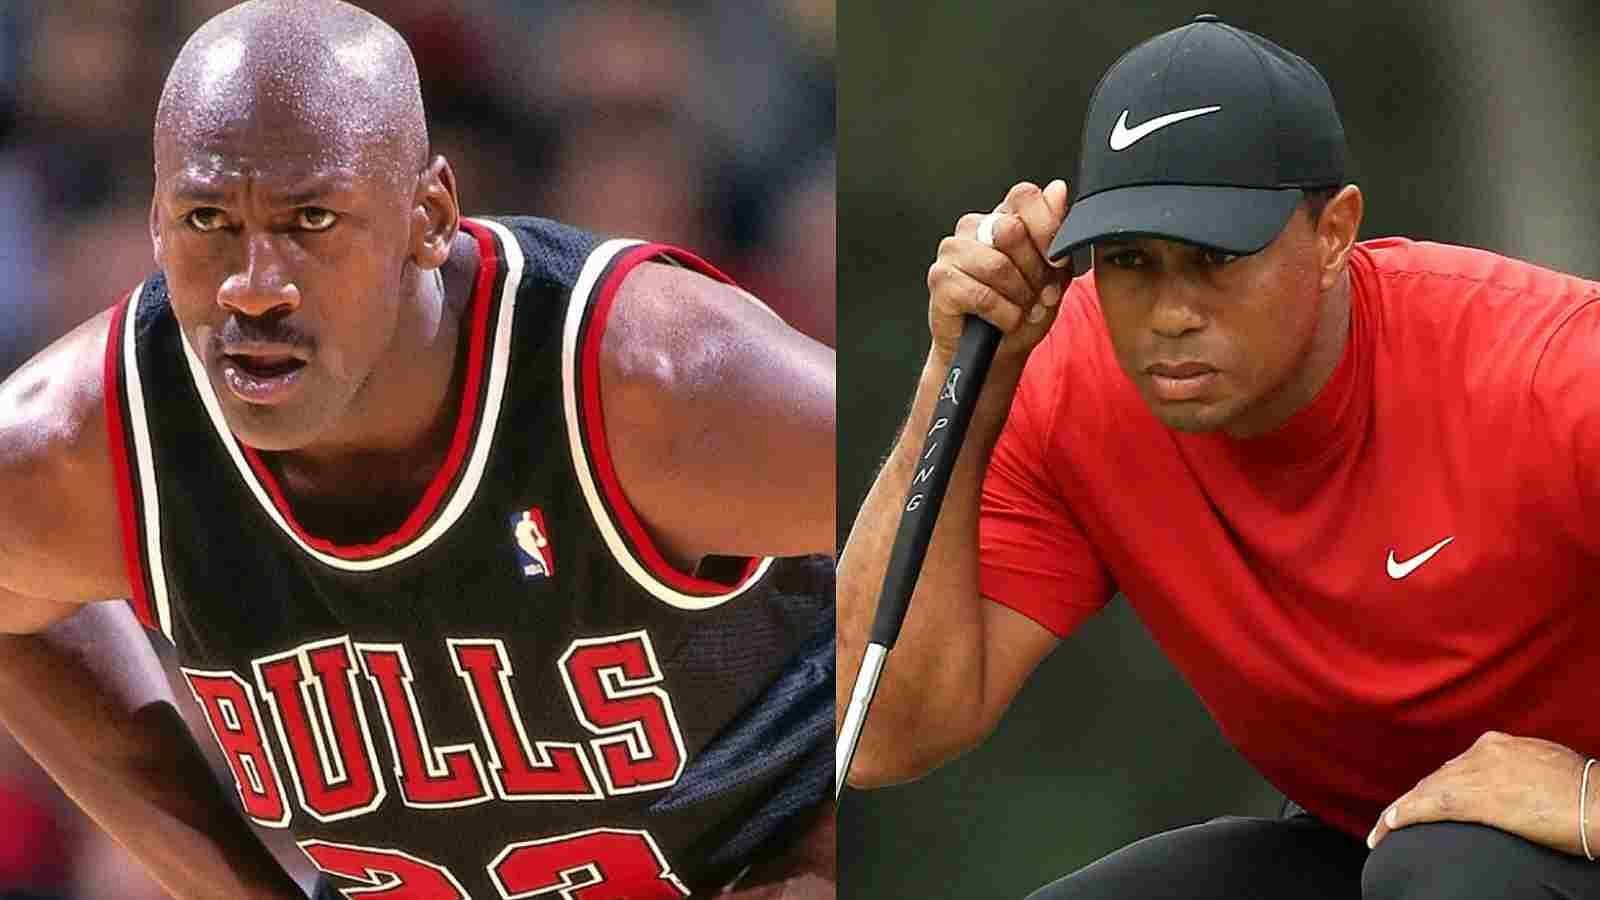 Chicago Bulls legend Michael Jordan and golf star Tiger Woods